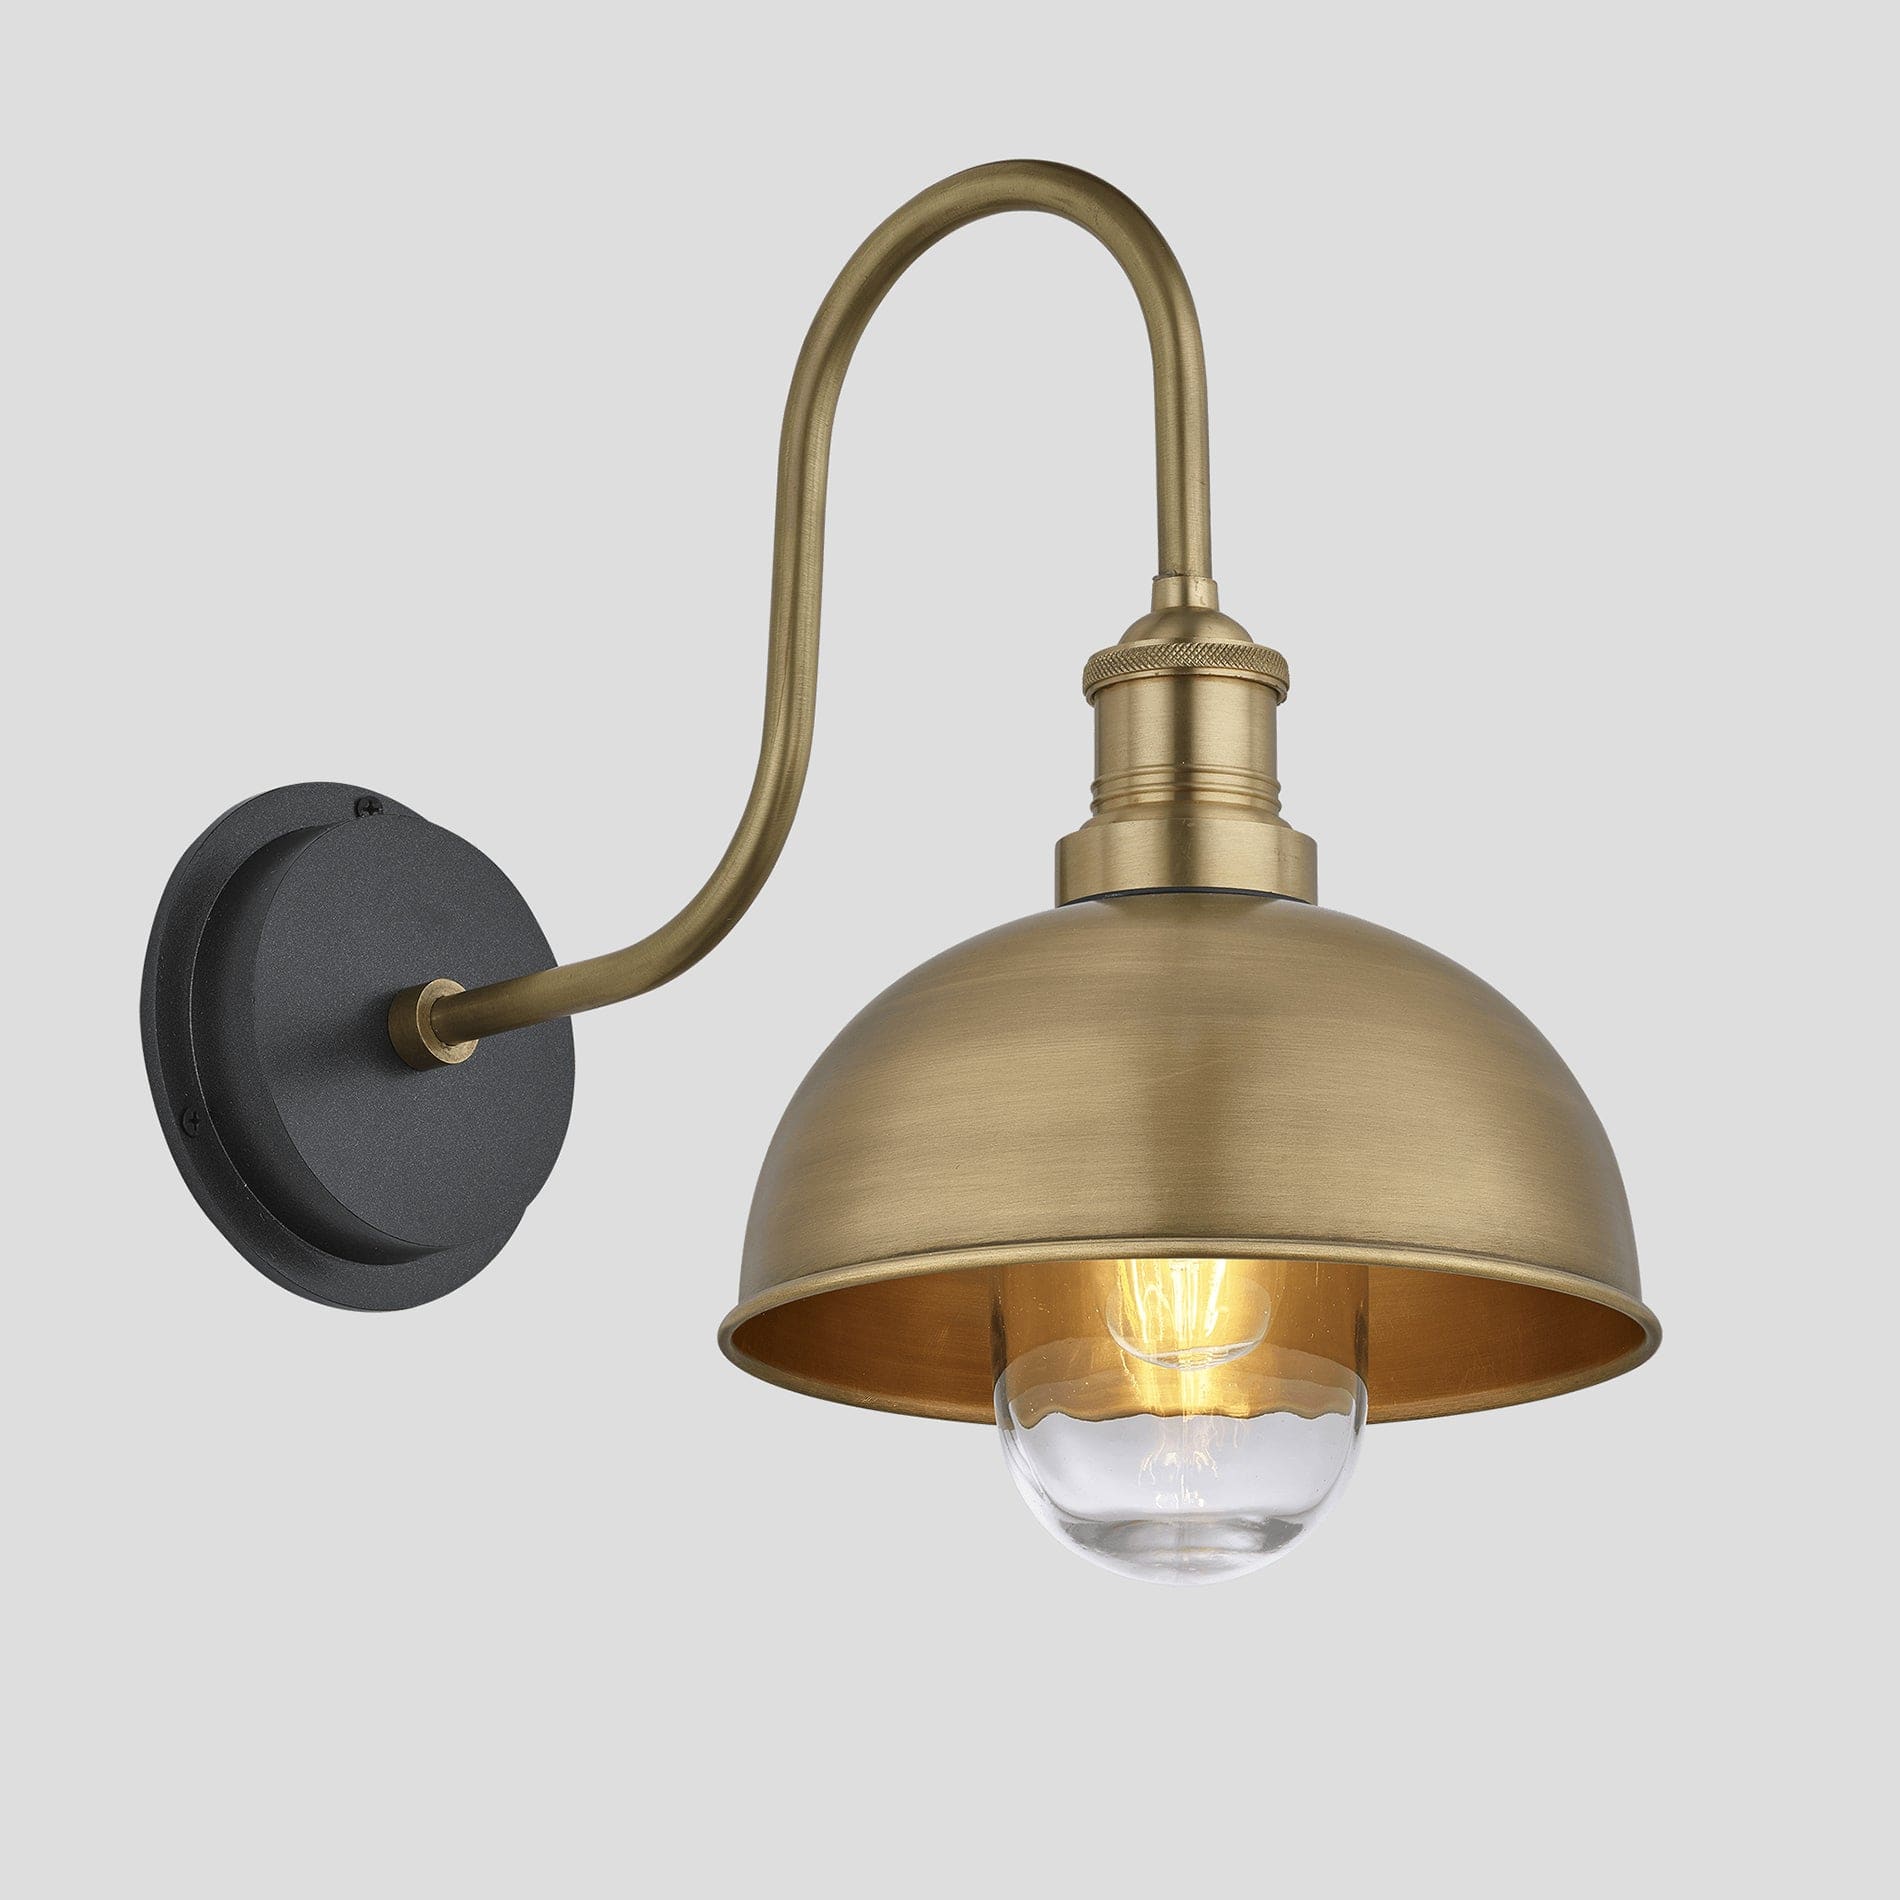 Swan Neck Outdoor & Bathroom Dome Wall Light - 8 Inch - Brass Industville SN-IP65-DWL8-B-BH